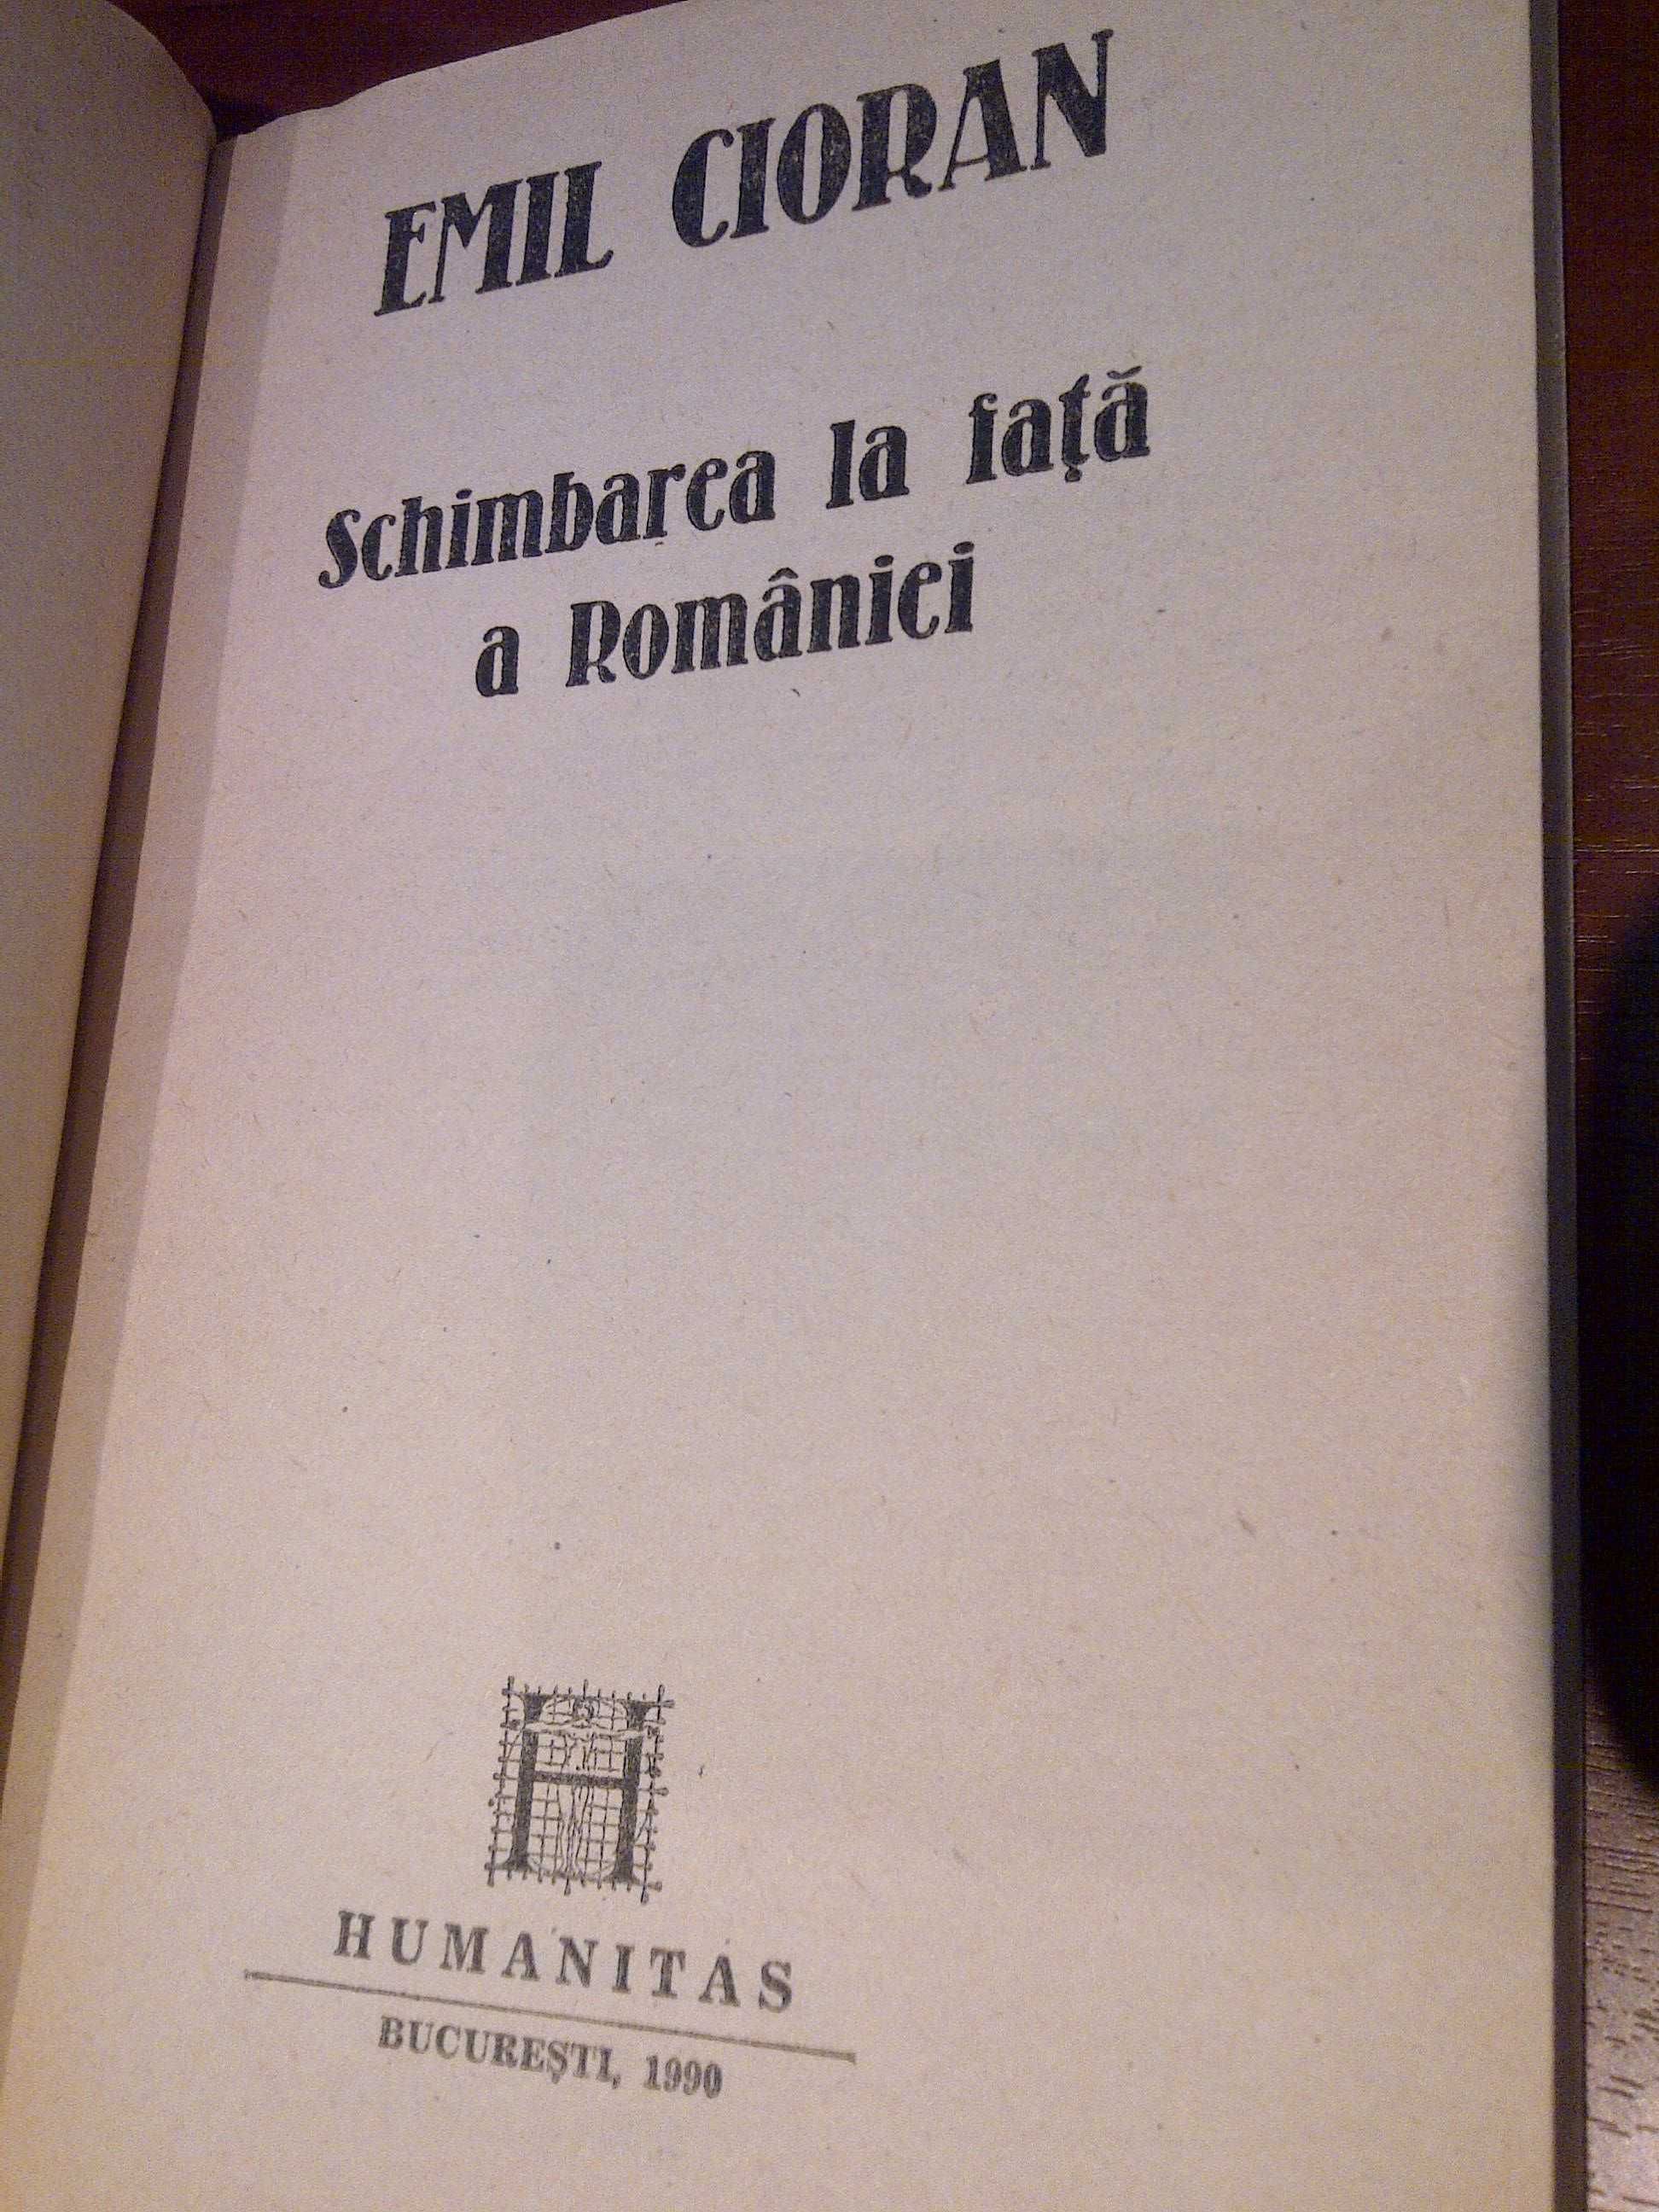 Emil Cioran "Schimbarea la fata a Romaniei"